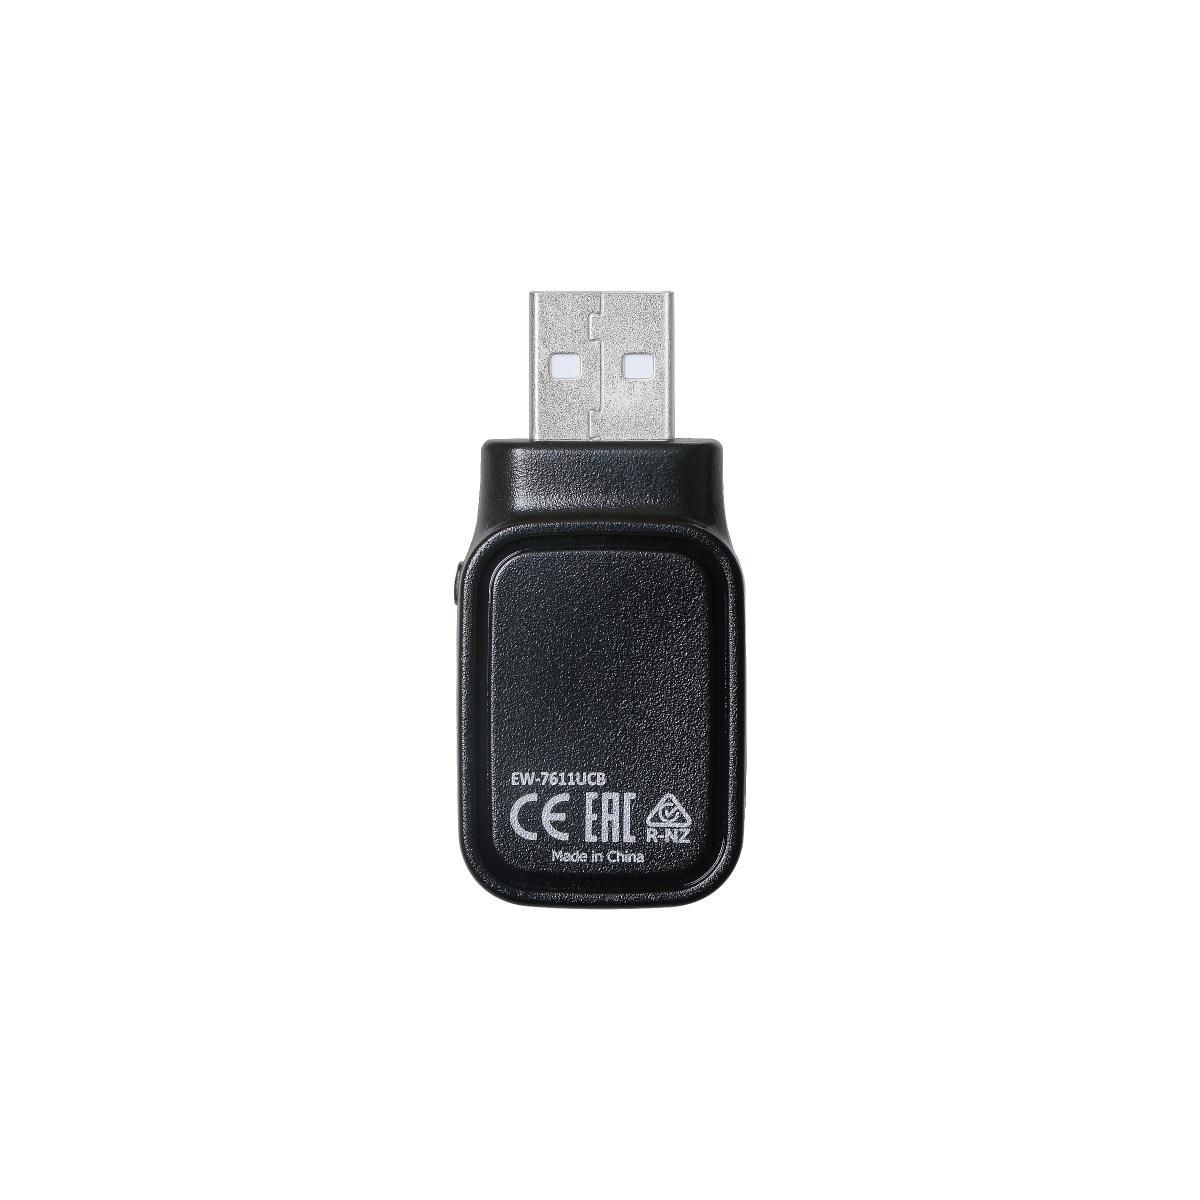 AC600 Dual-Band Wi-Fi & Bluetooth 4.0 USB Adapter_4